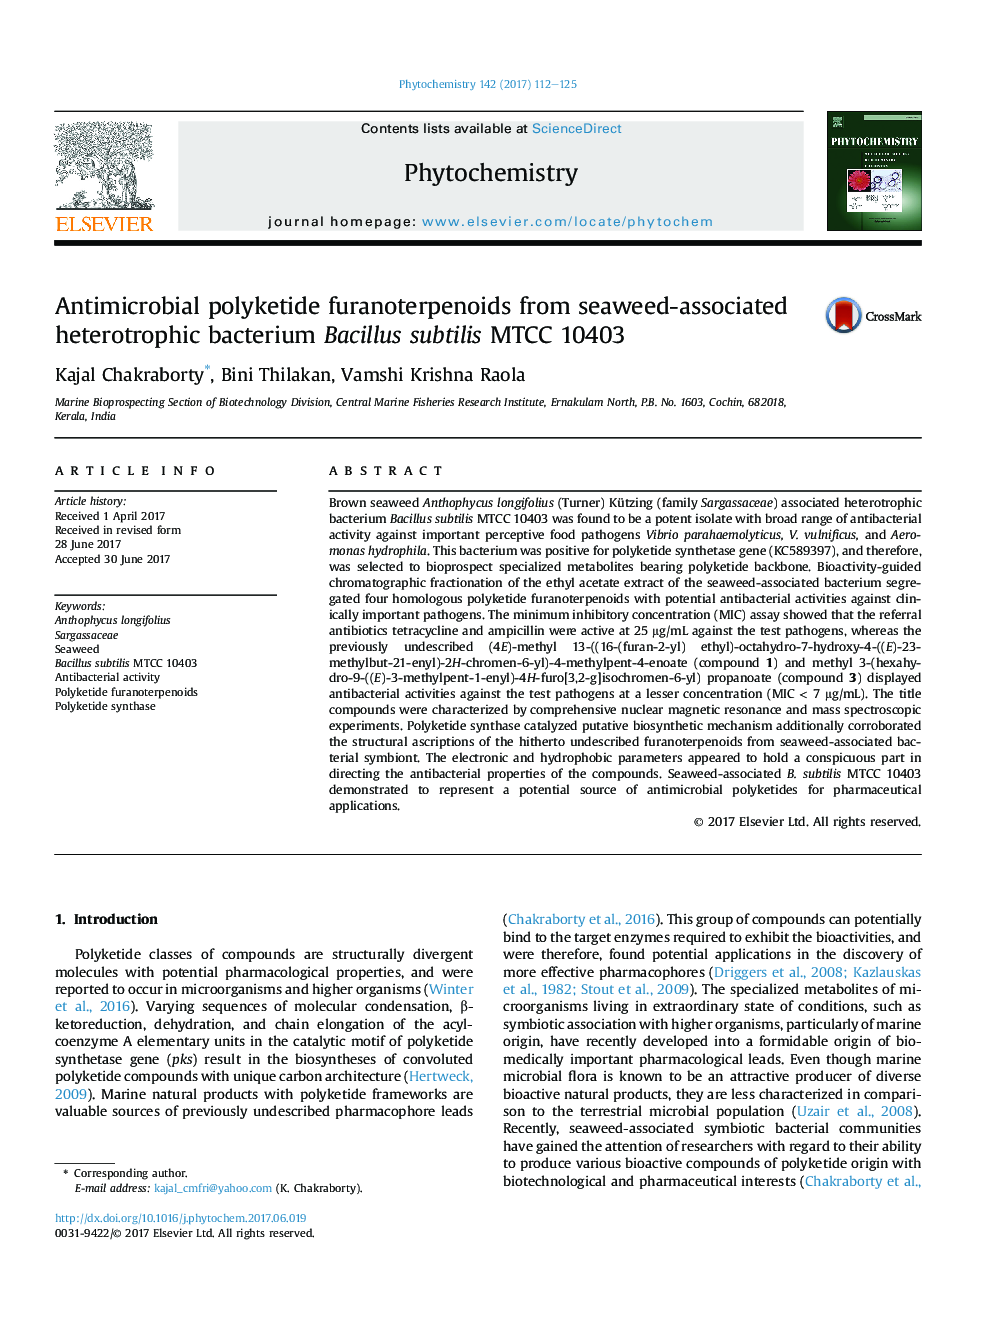 Antimicrobial polyketide furanoterpenoids from seaweed-associated heterotrophic bacterium Bacillus subtilis MTCC 10403